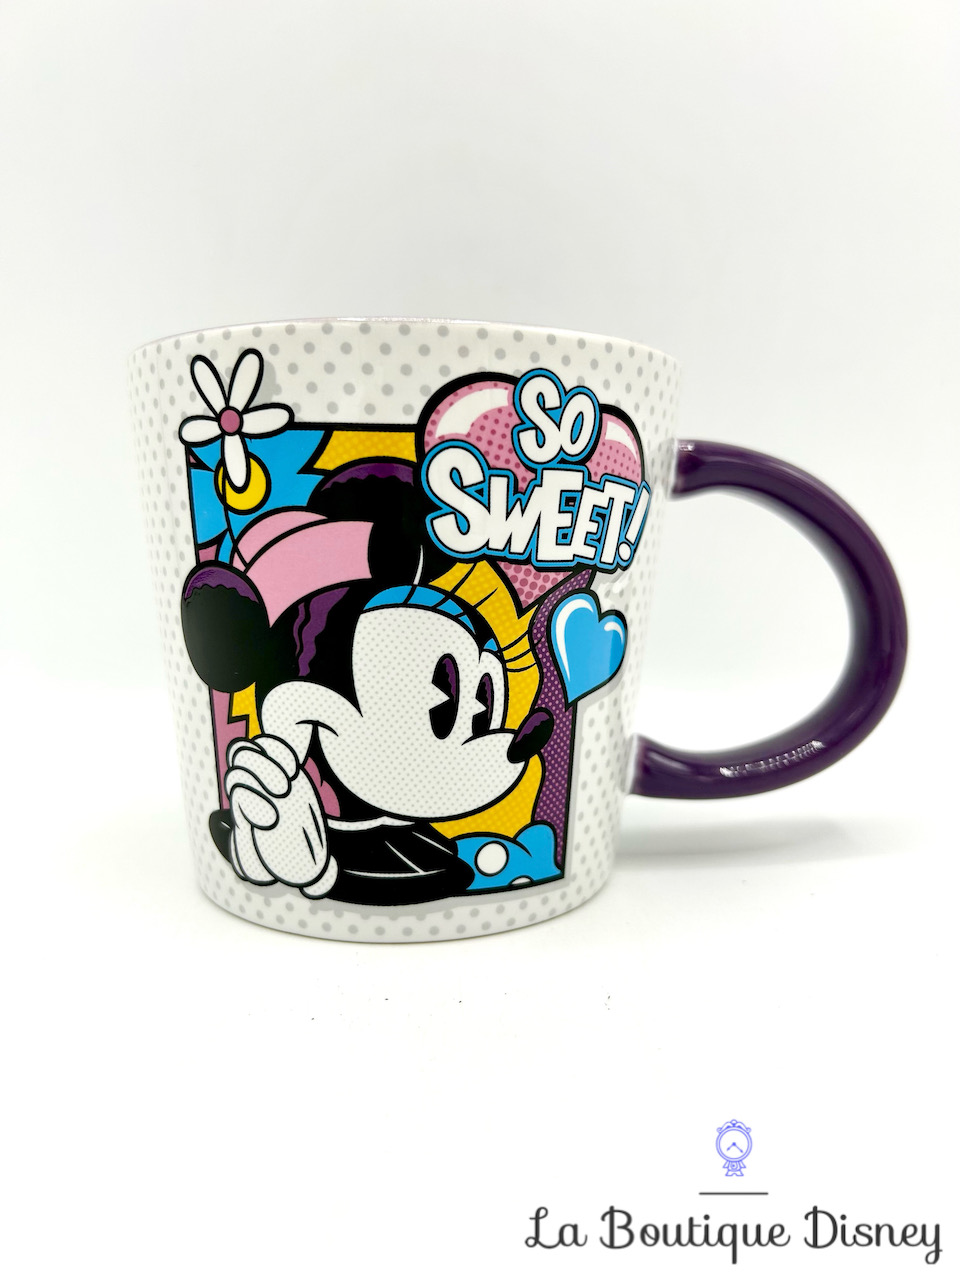 Tasse Minnie Mouse So Sweet Disney Store 2018 mug BD rétro vintage